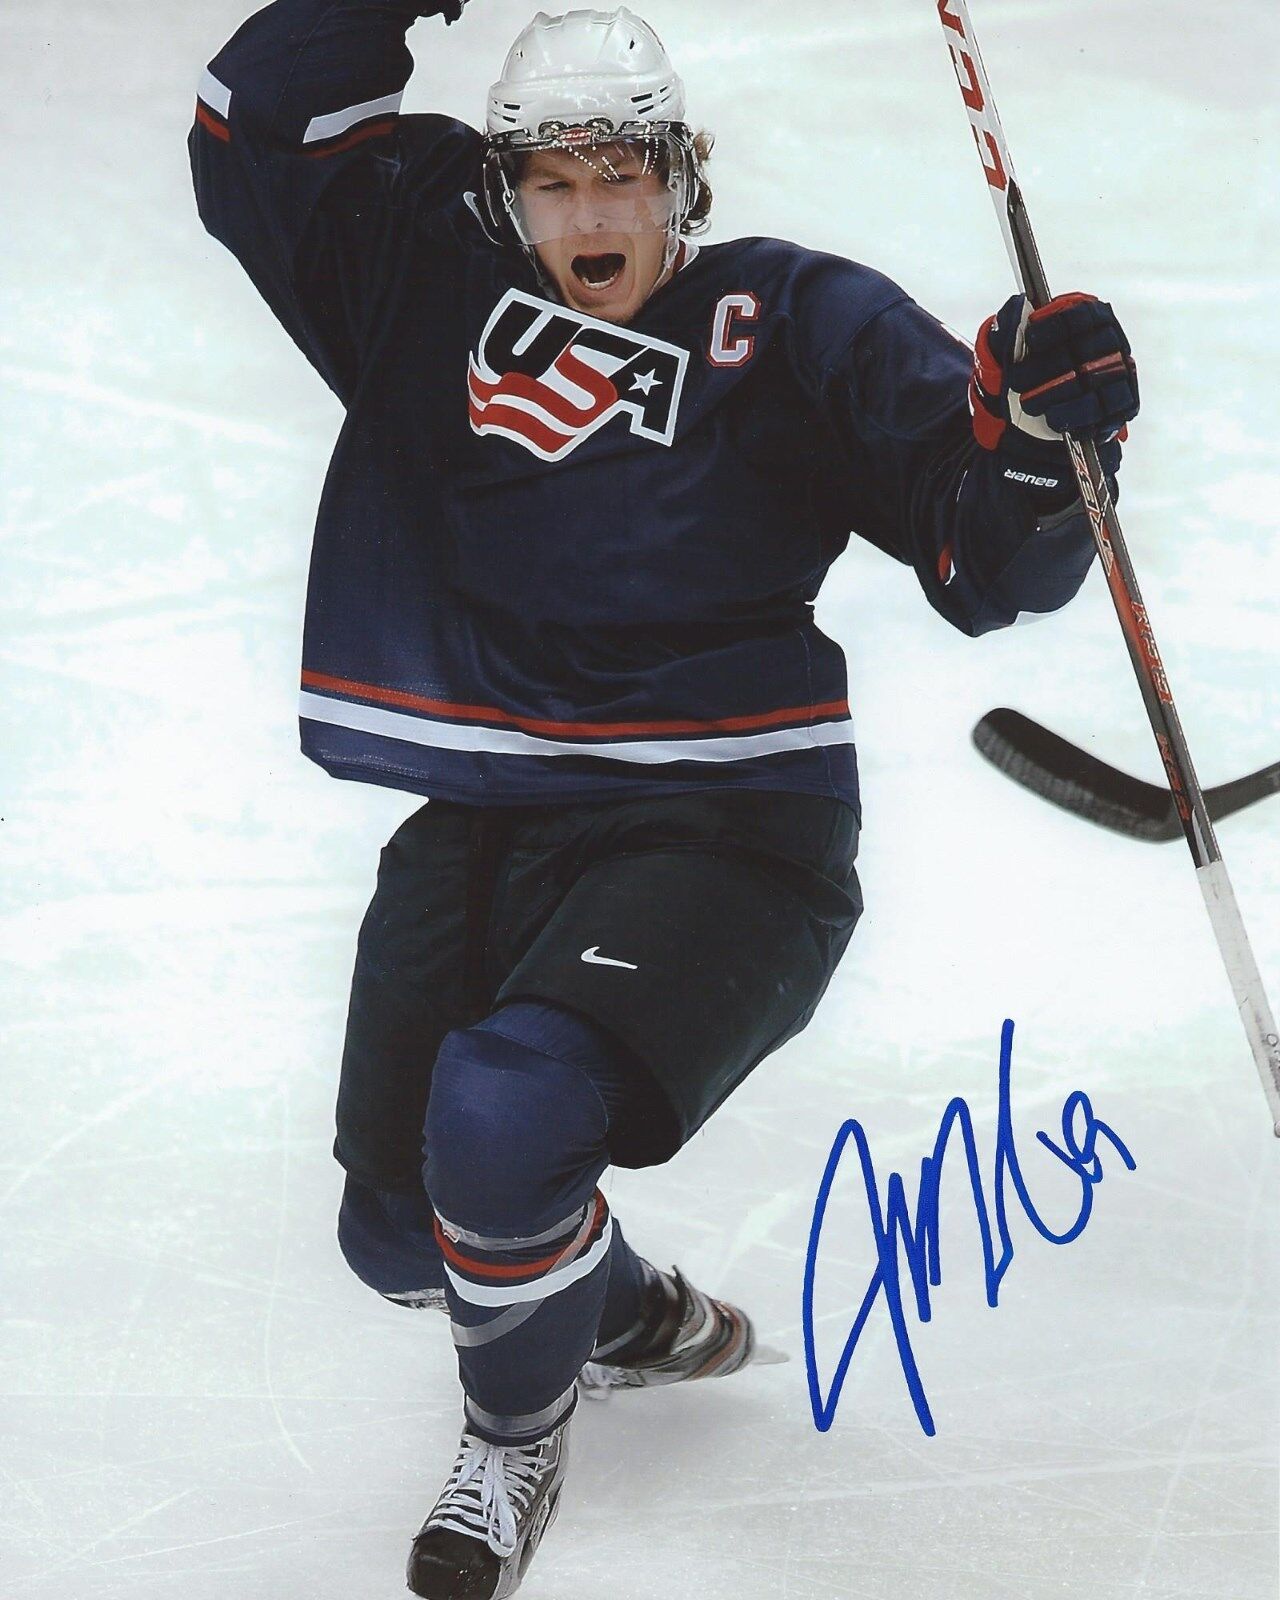 Jake McCabe Signed 8x10 Photo Poster painting Team USA World Juniors Autographed COA